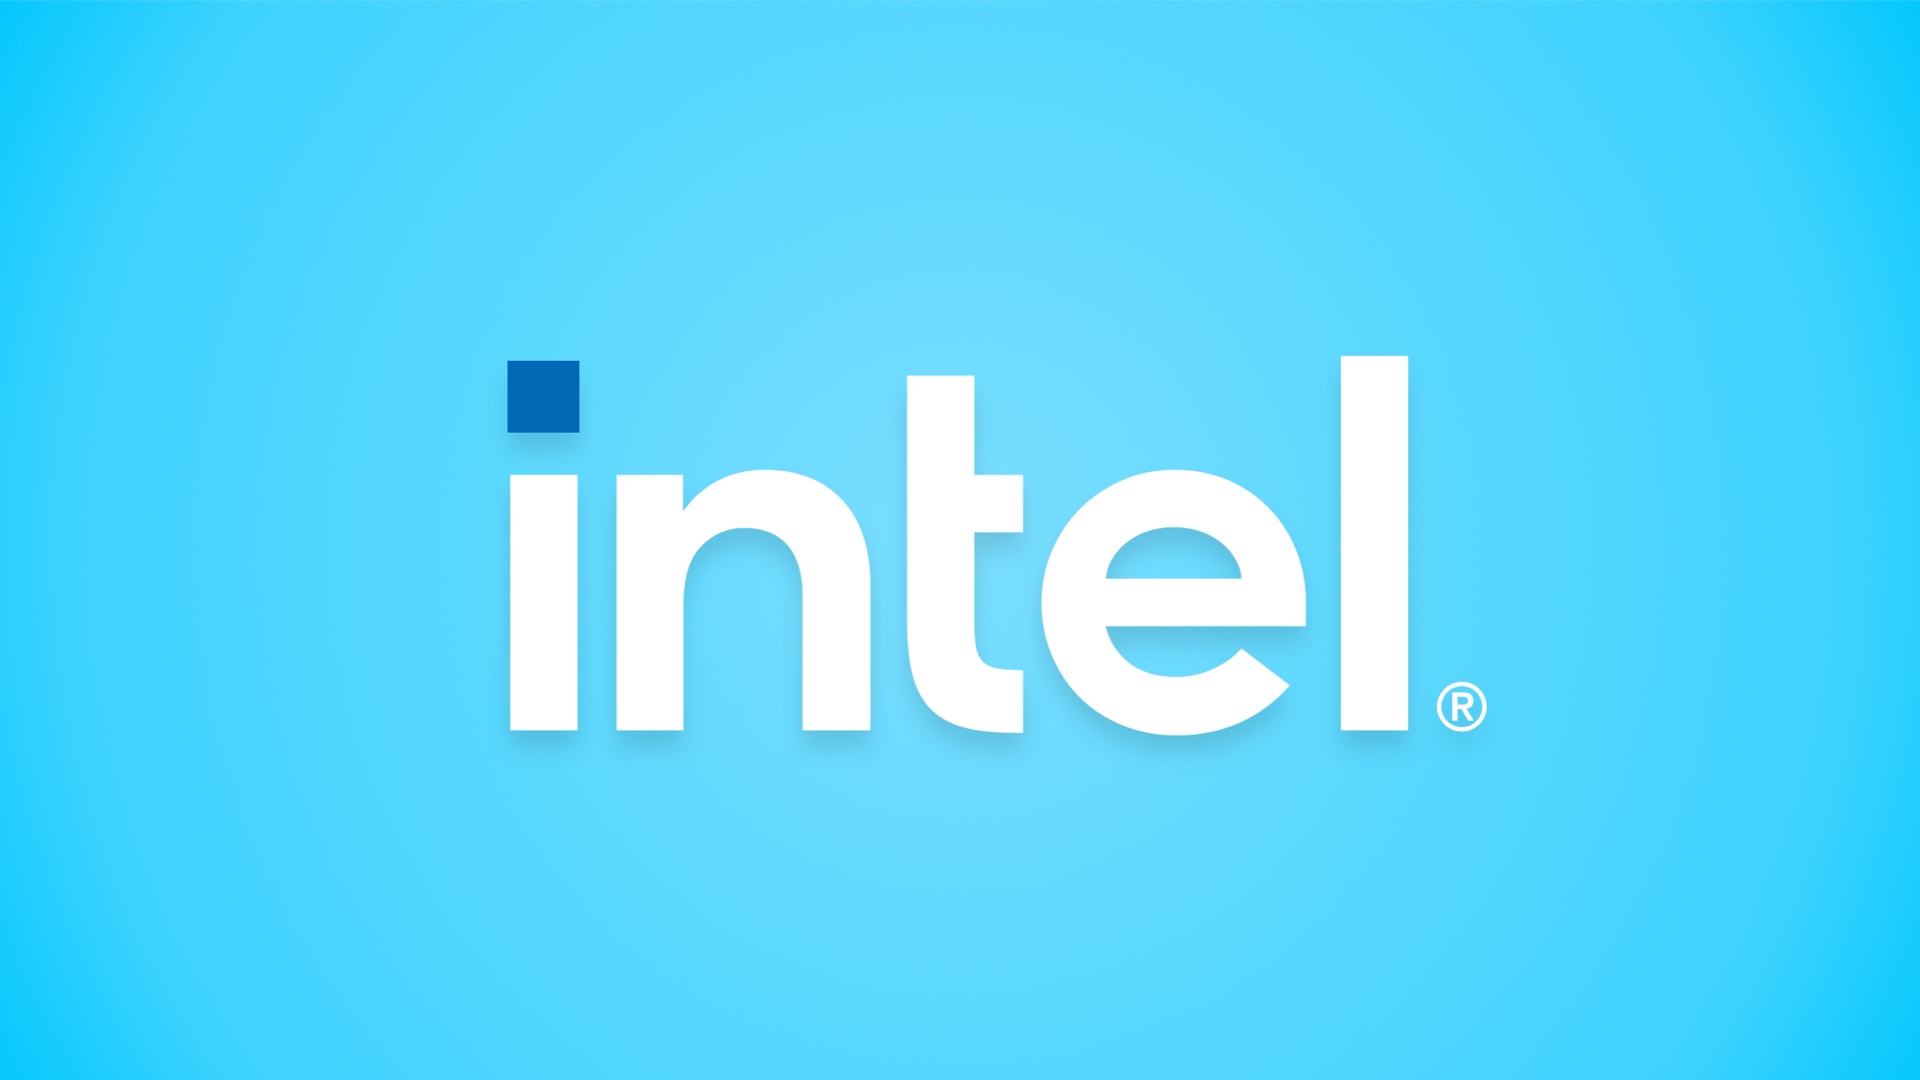 Prosesor Intel